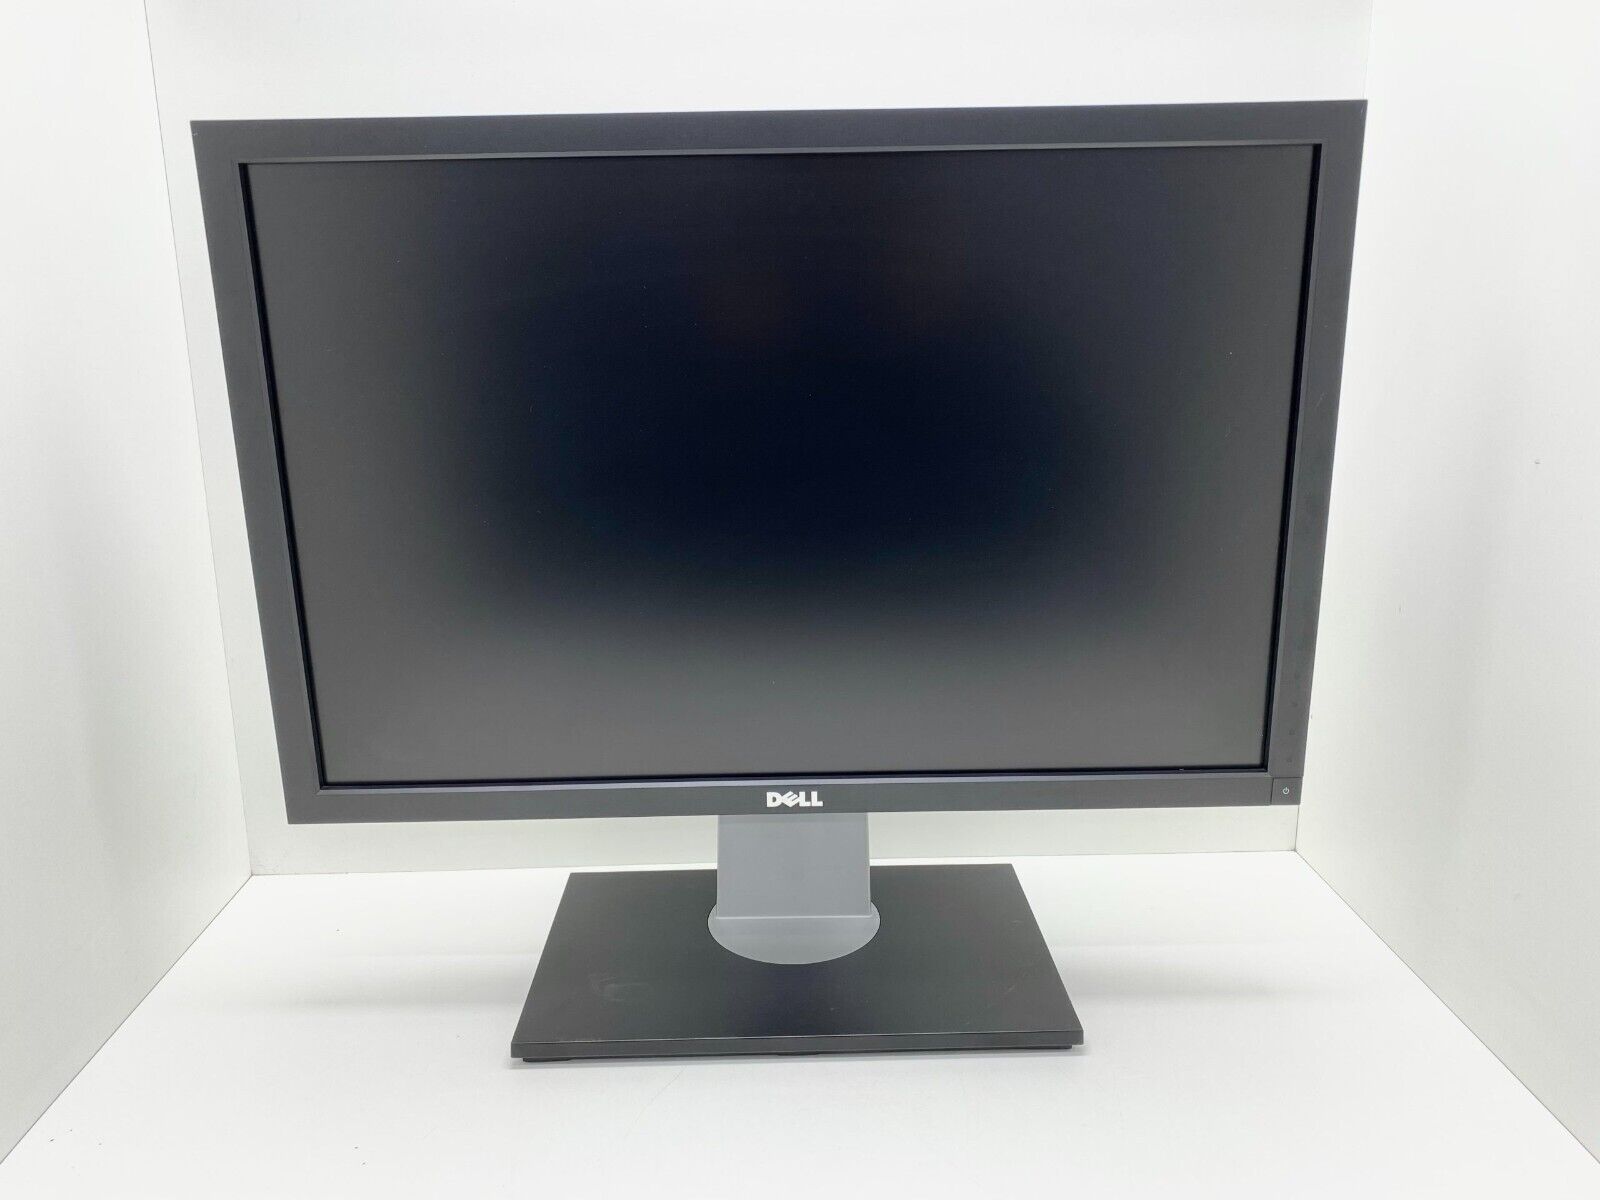 Dell UltraSharp U2410 Widescreen LCD Monitor 1920x1200 HDMI U2410F With Stand